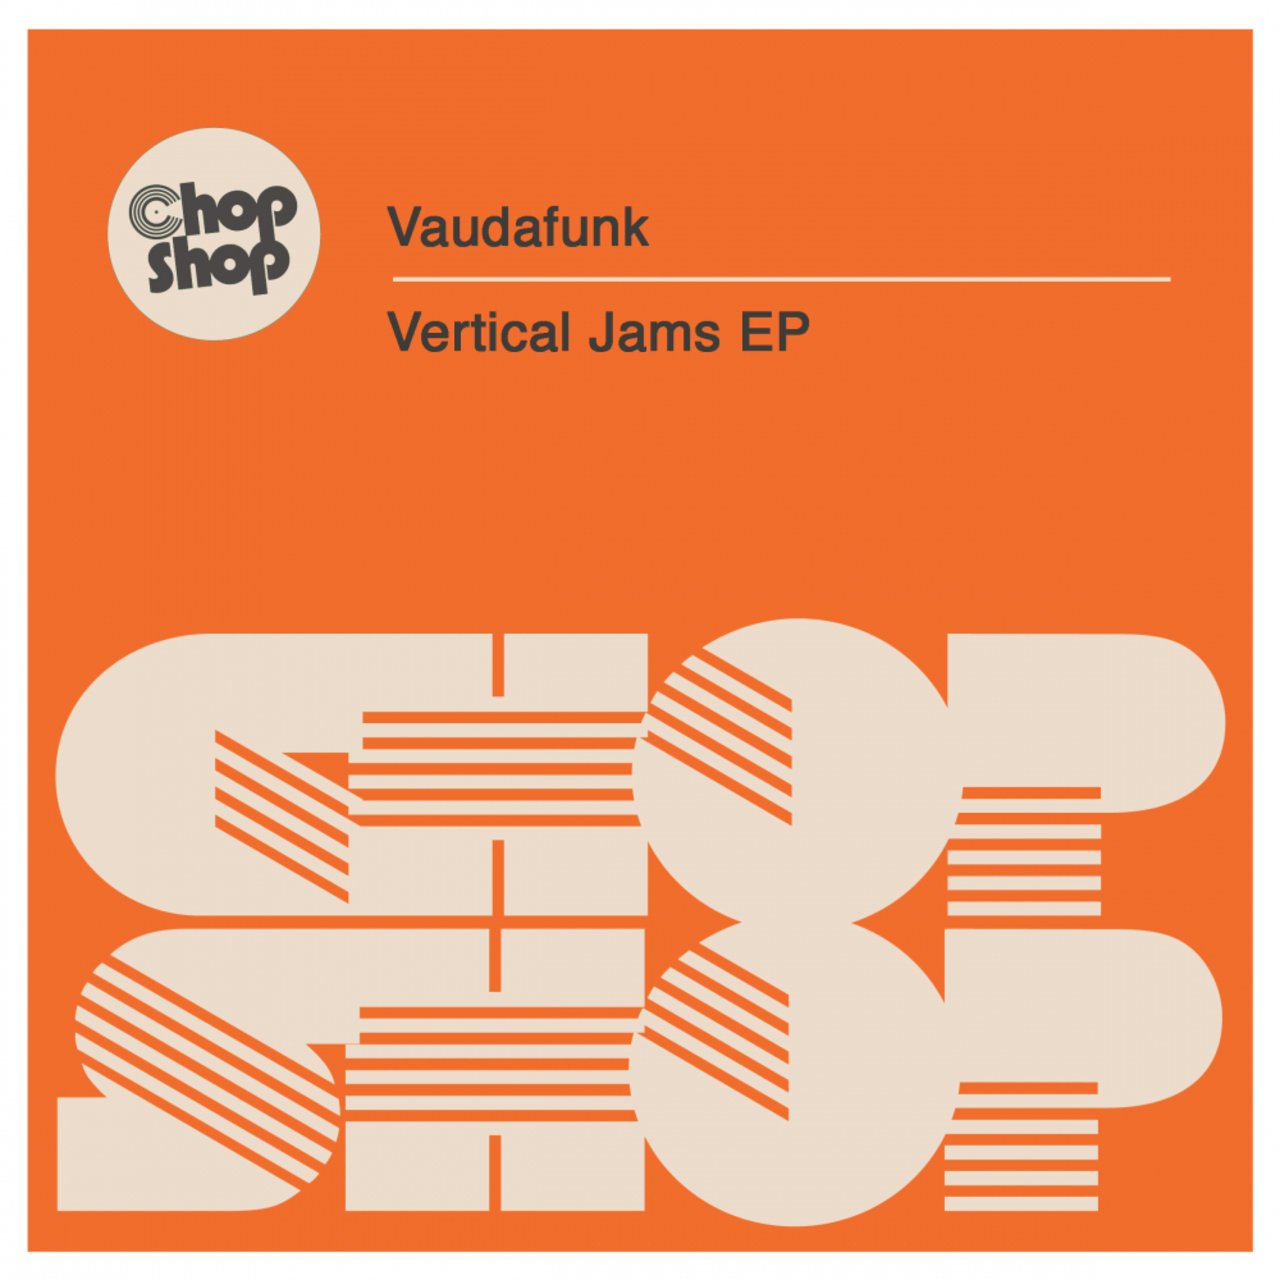 Vaudafunk - Vertical Jams EP / Chopshop Music